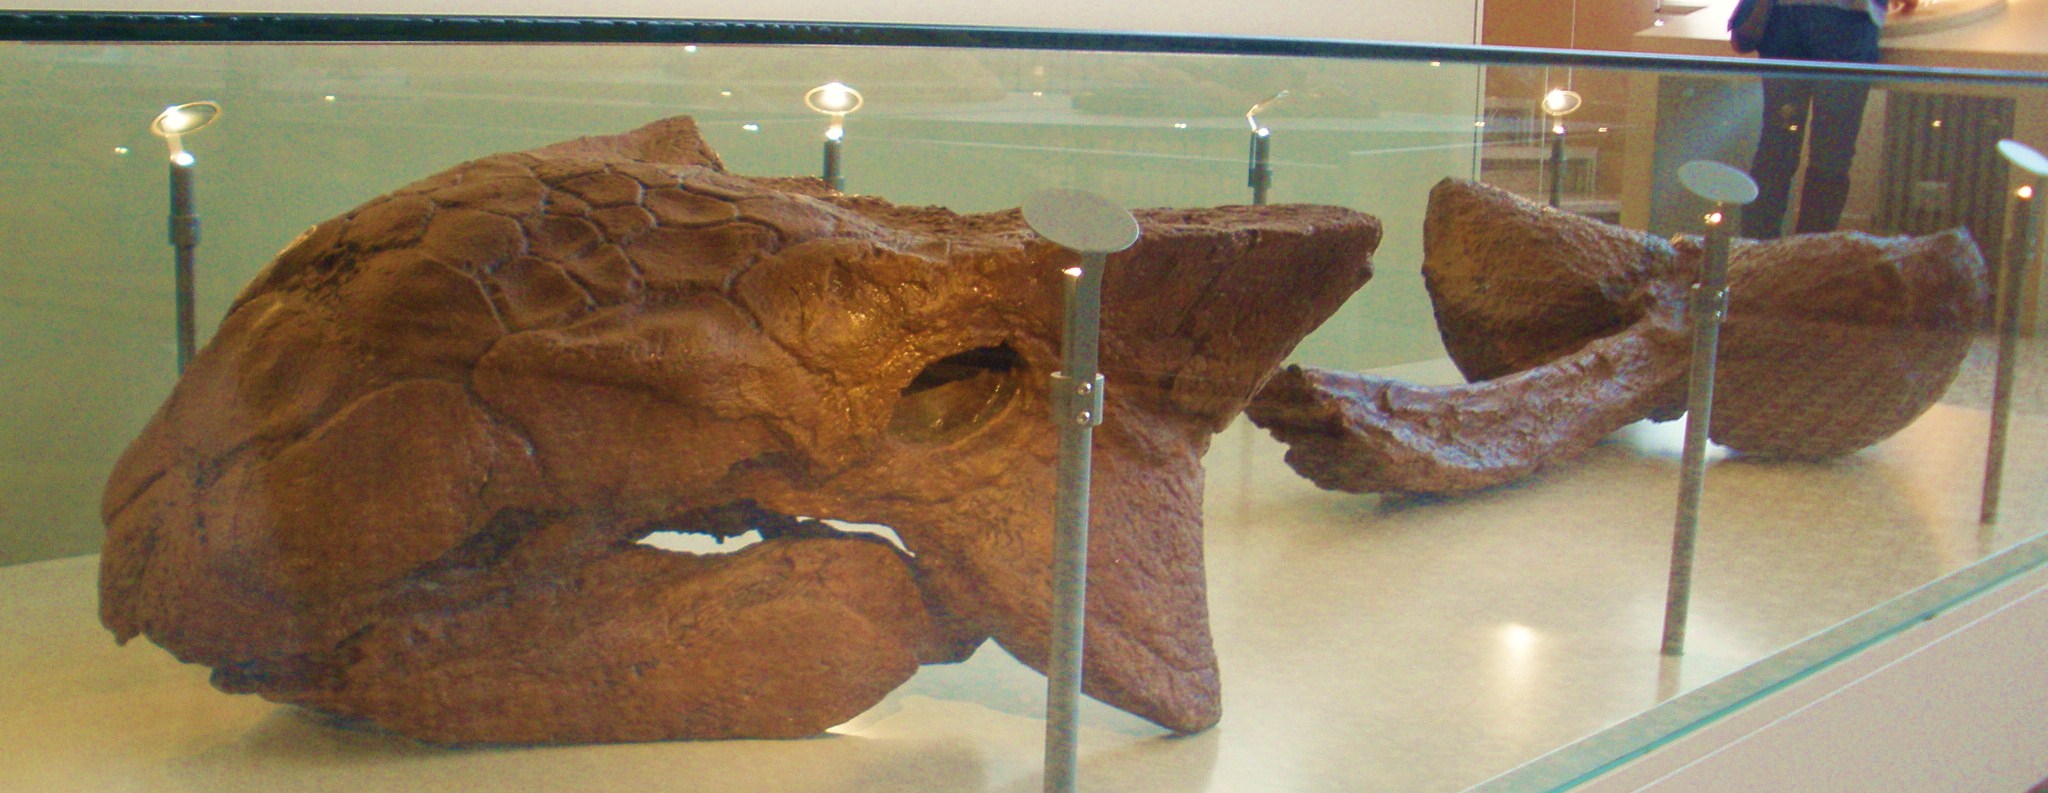 New dinosaur fossils called ankylosaur found in Montana, Canada